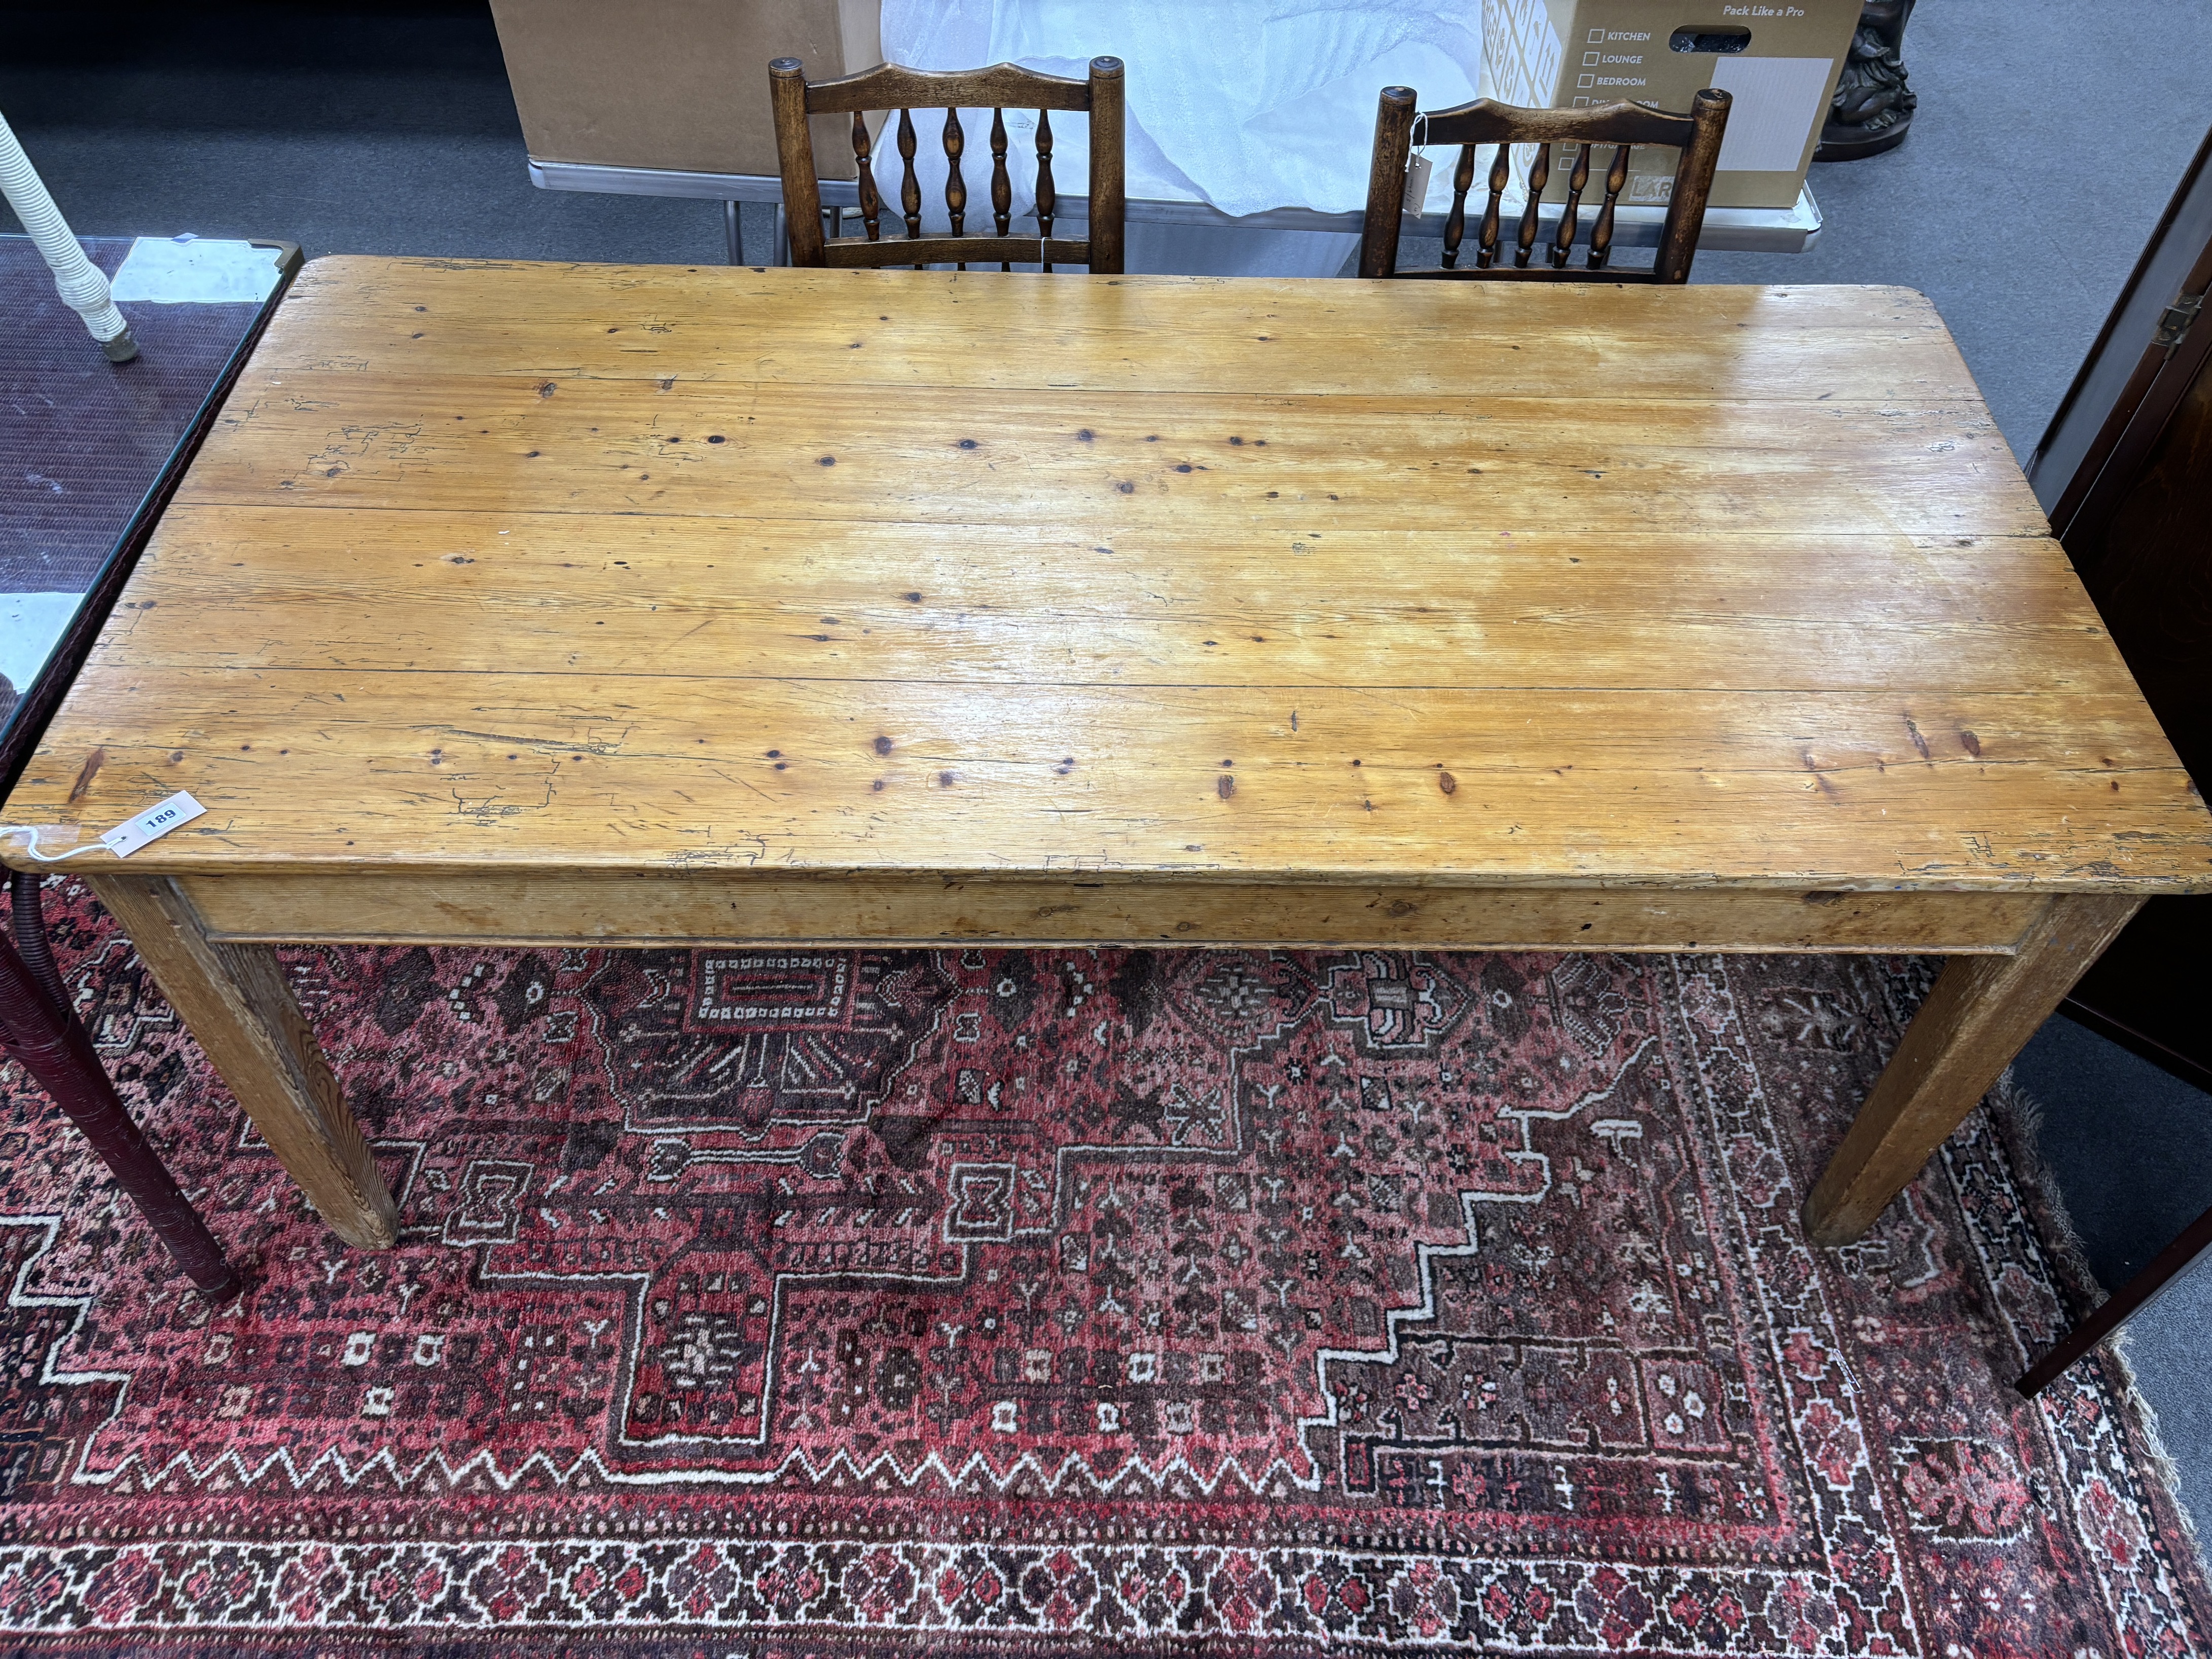 A 19th century rectangular pine kitchen table, width 182cm, depth 88cm, height 71cm